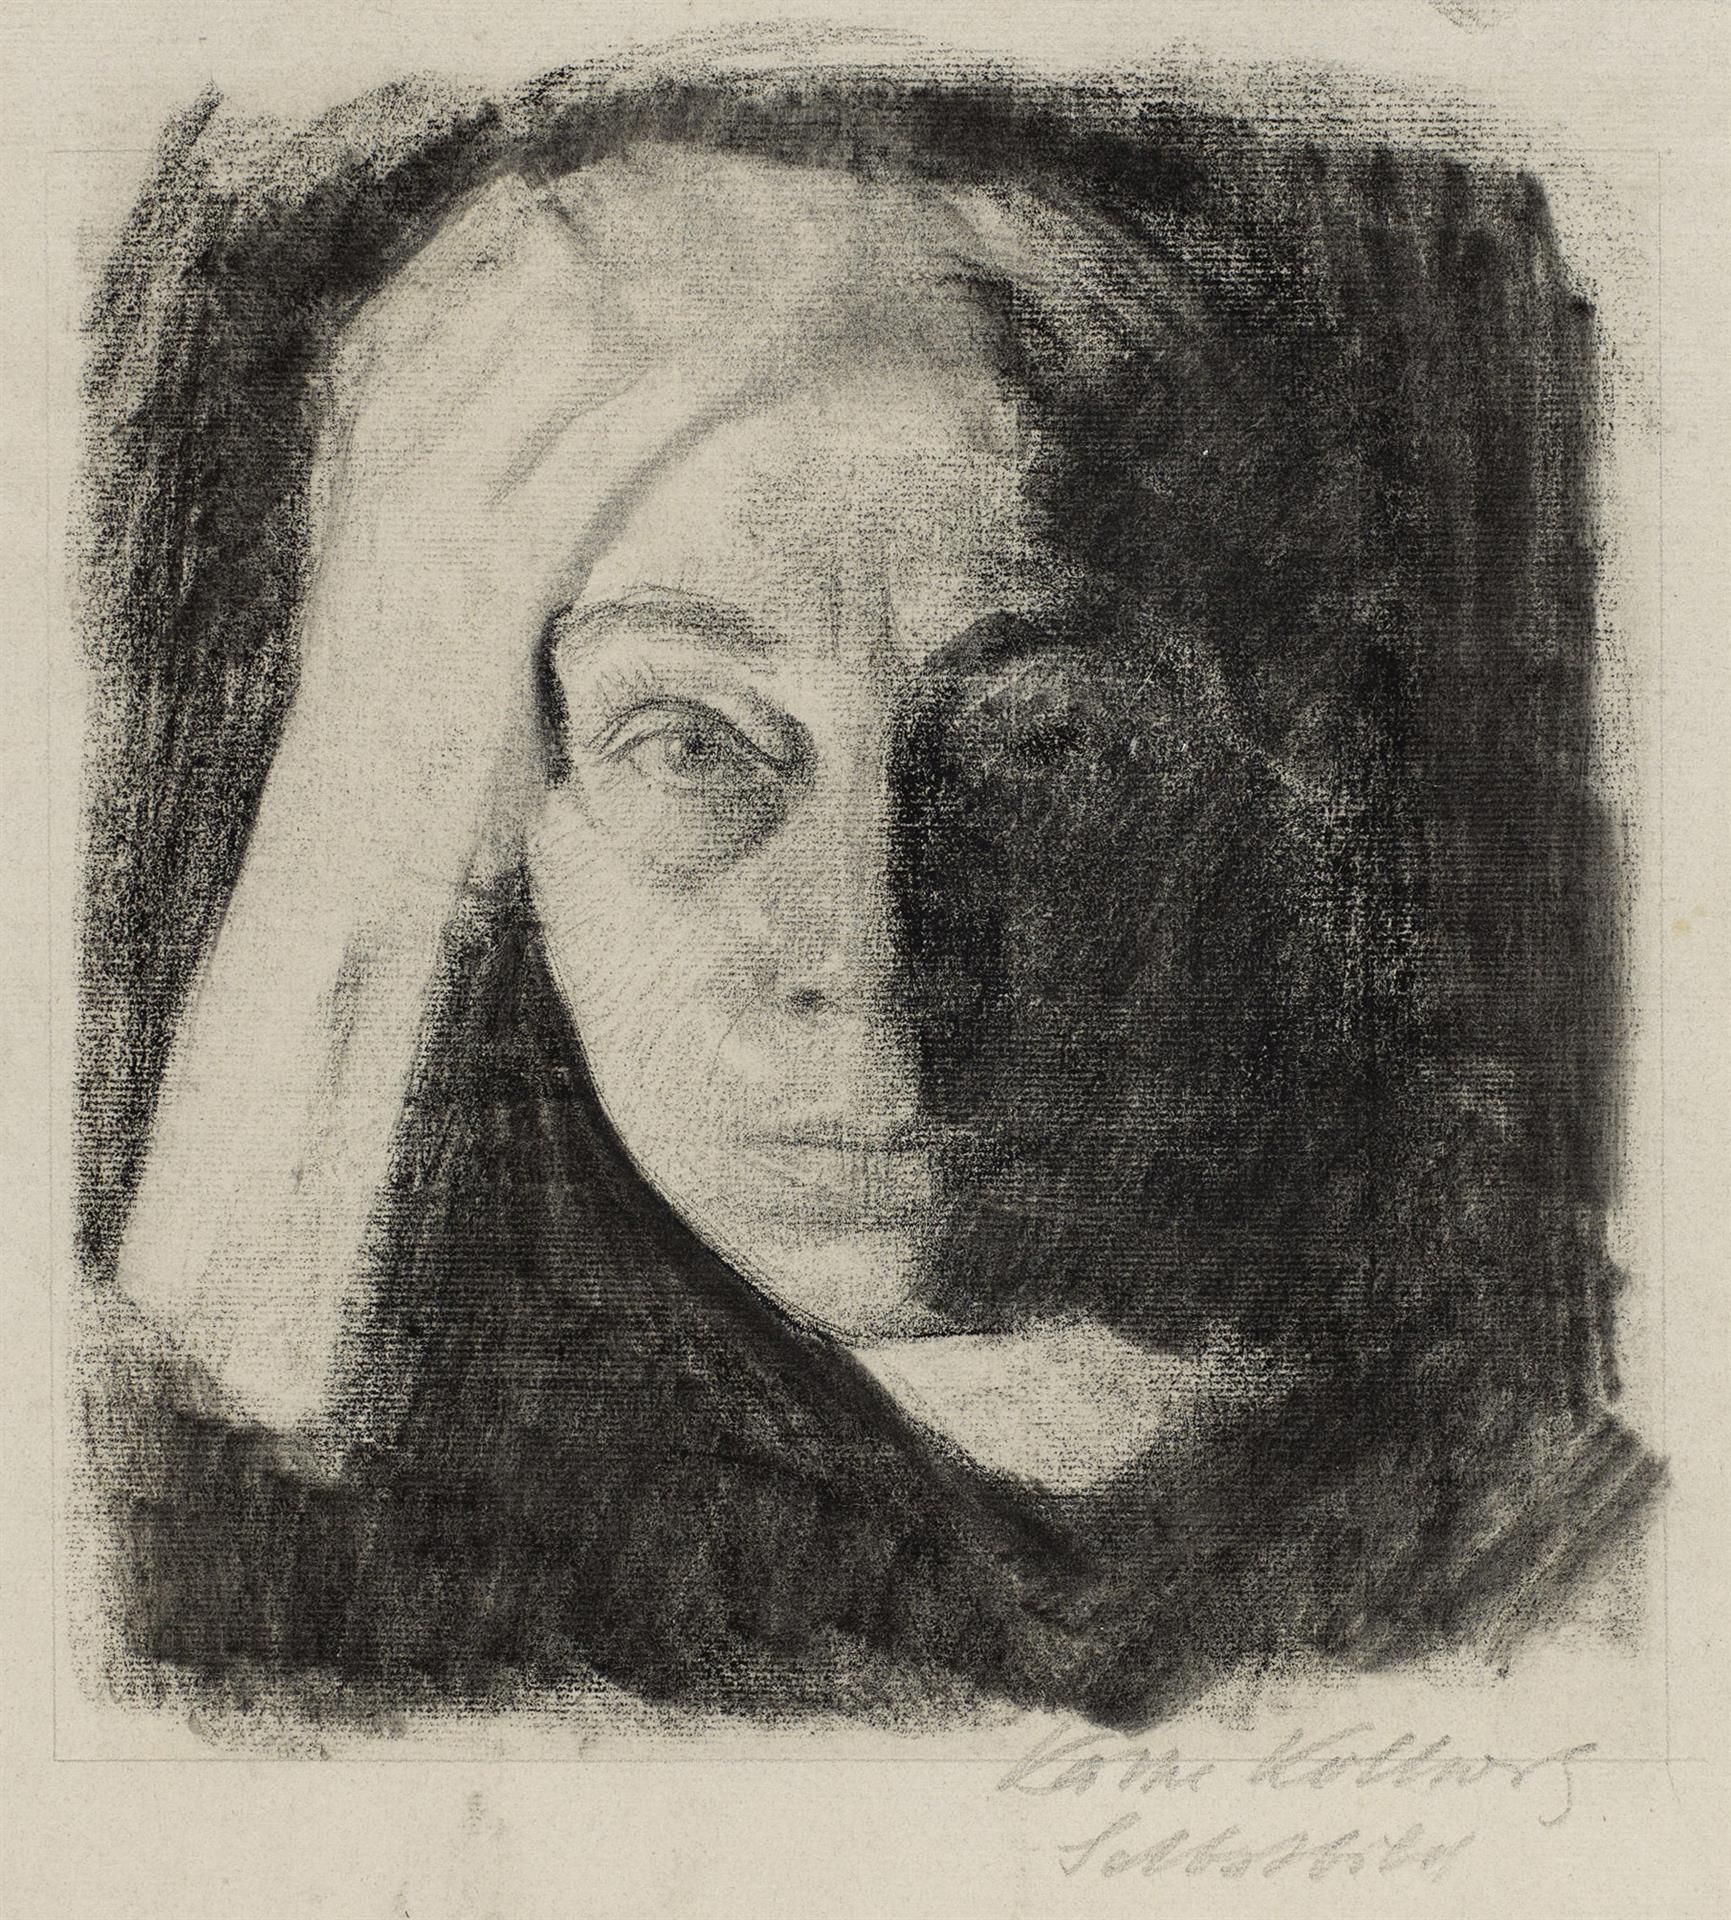 Käthe Kollwitz, Self-portrait en face, c 1910, charcoal on grey-blue Ingres paper, NT 688, Cologne Kollwitz Collection © Käthe Kollwitz Museum Köln